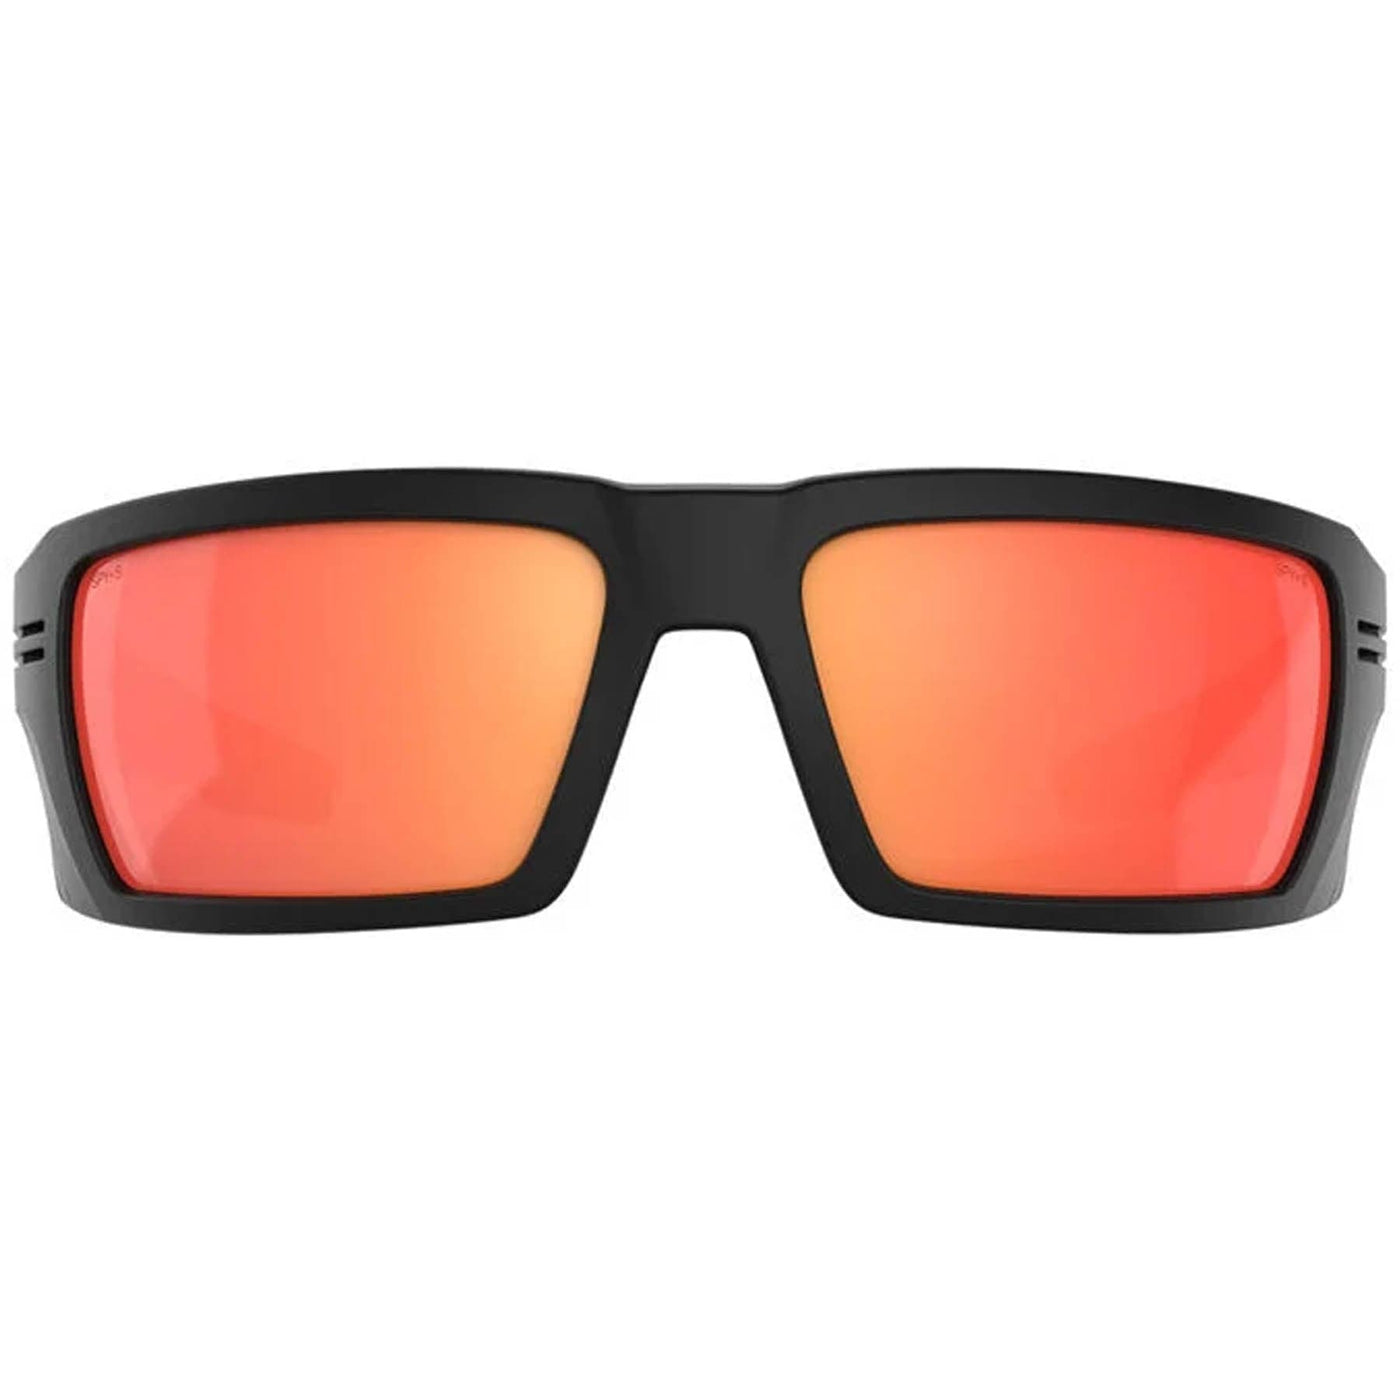 SPY REBAR SE ANSI Polarized Sunglasses, Happy BOOST - Orange 8Lines Shop - Fast Shipping